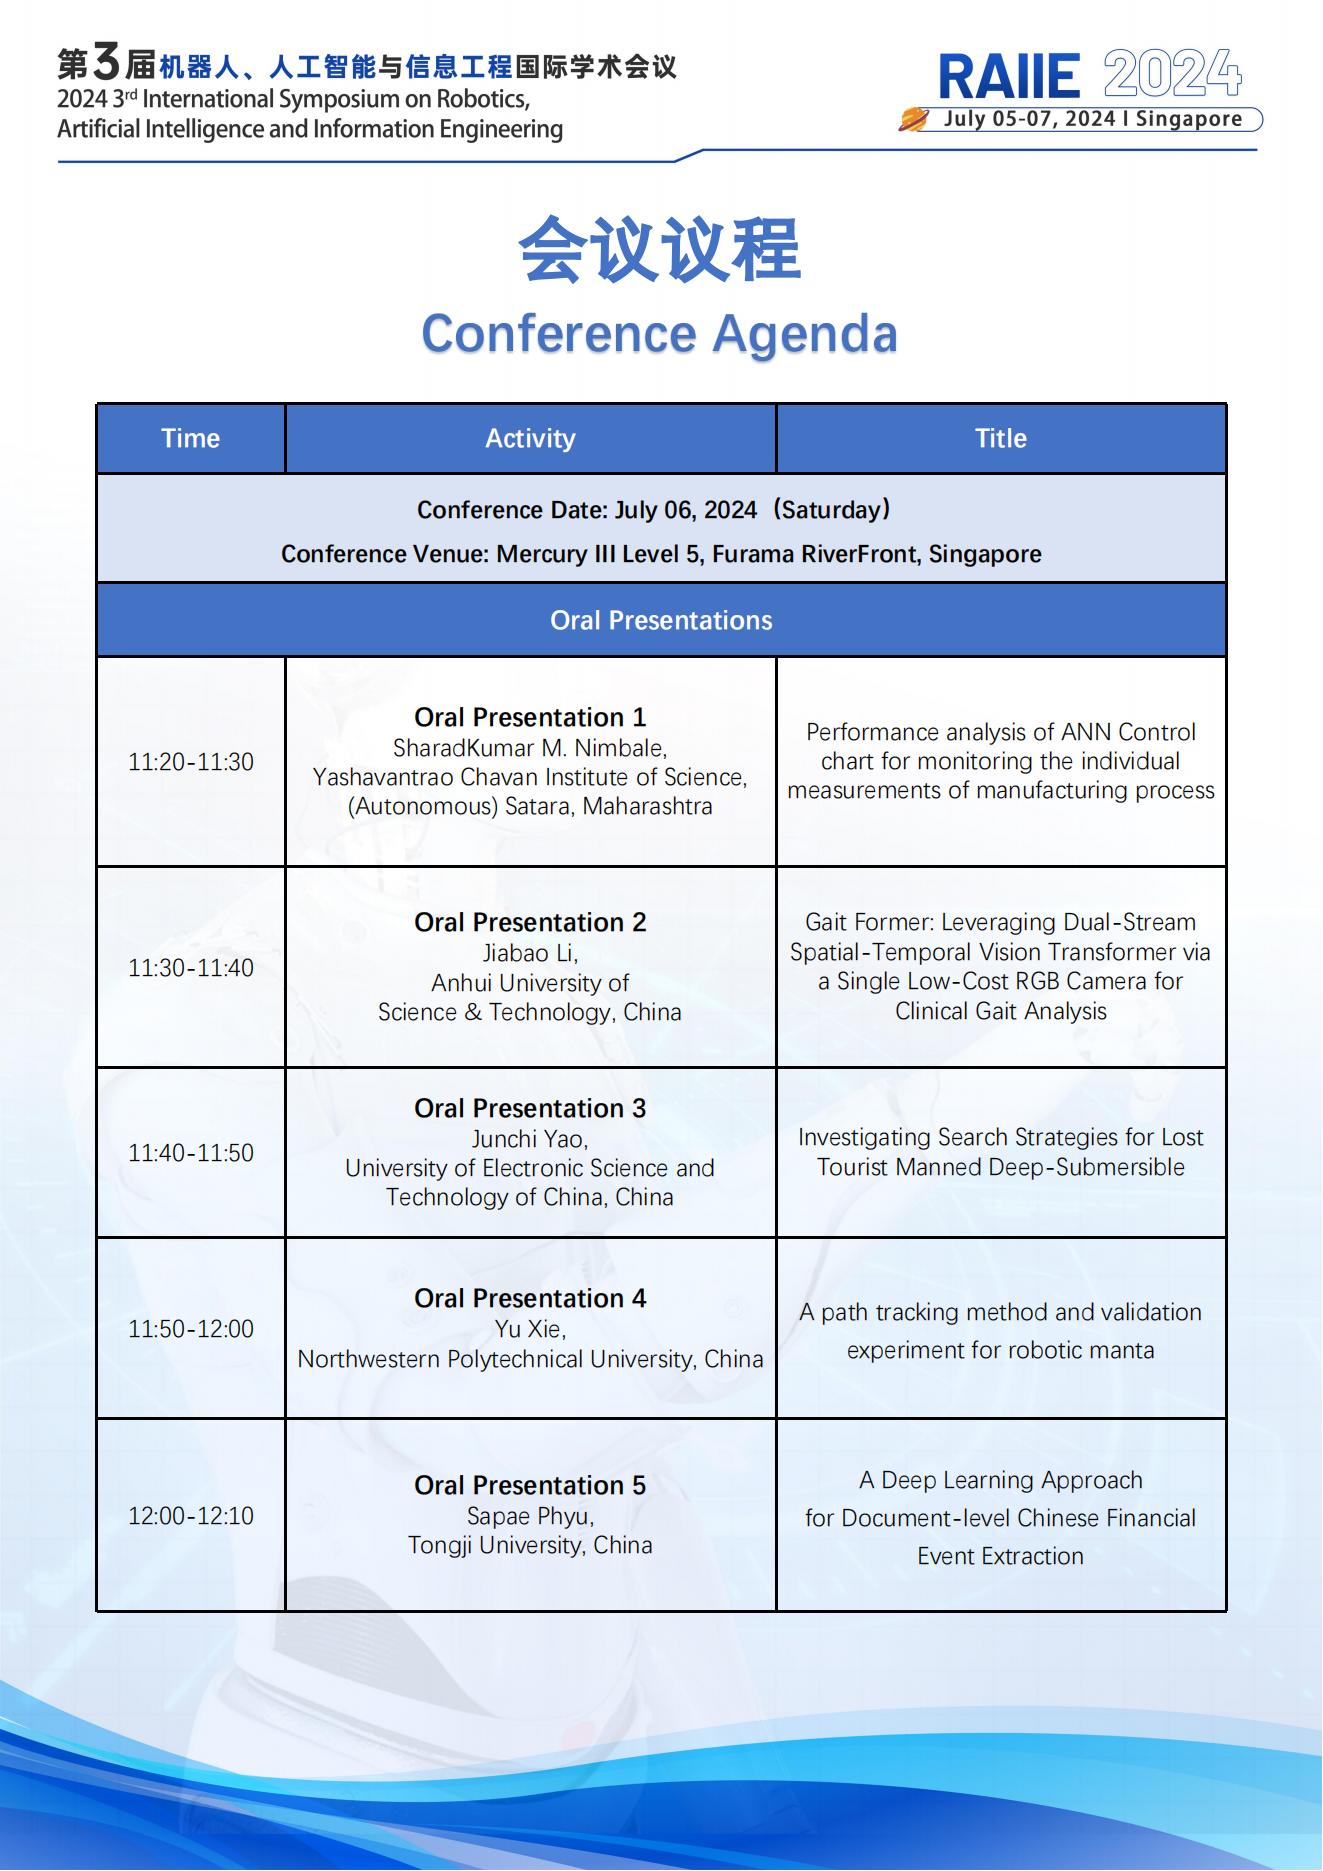 RAIIE 2024-Conference Agenda_01.jpg